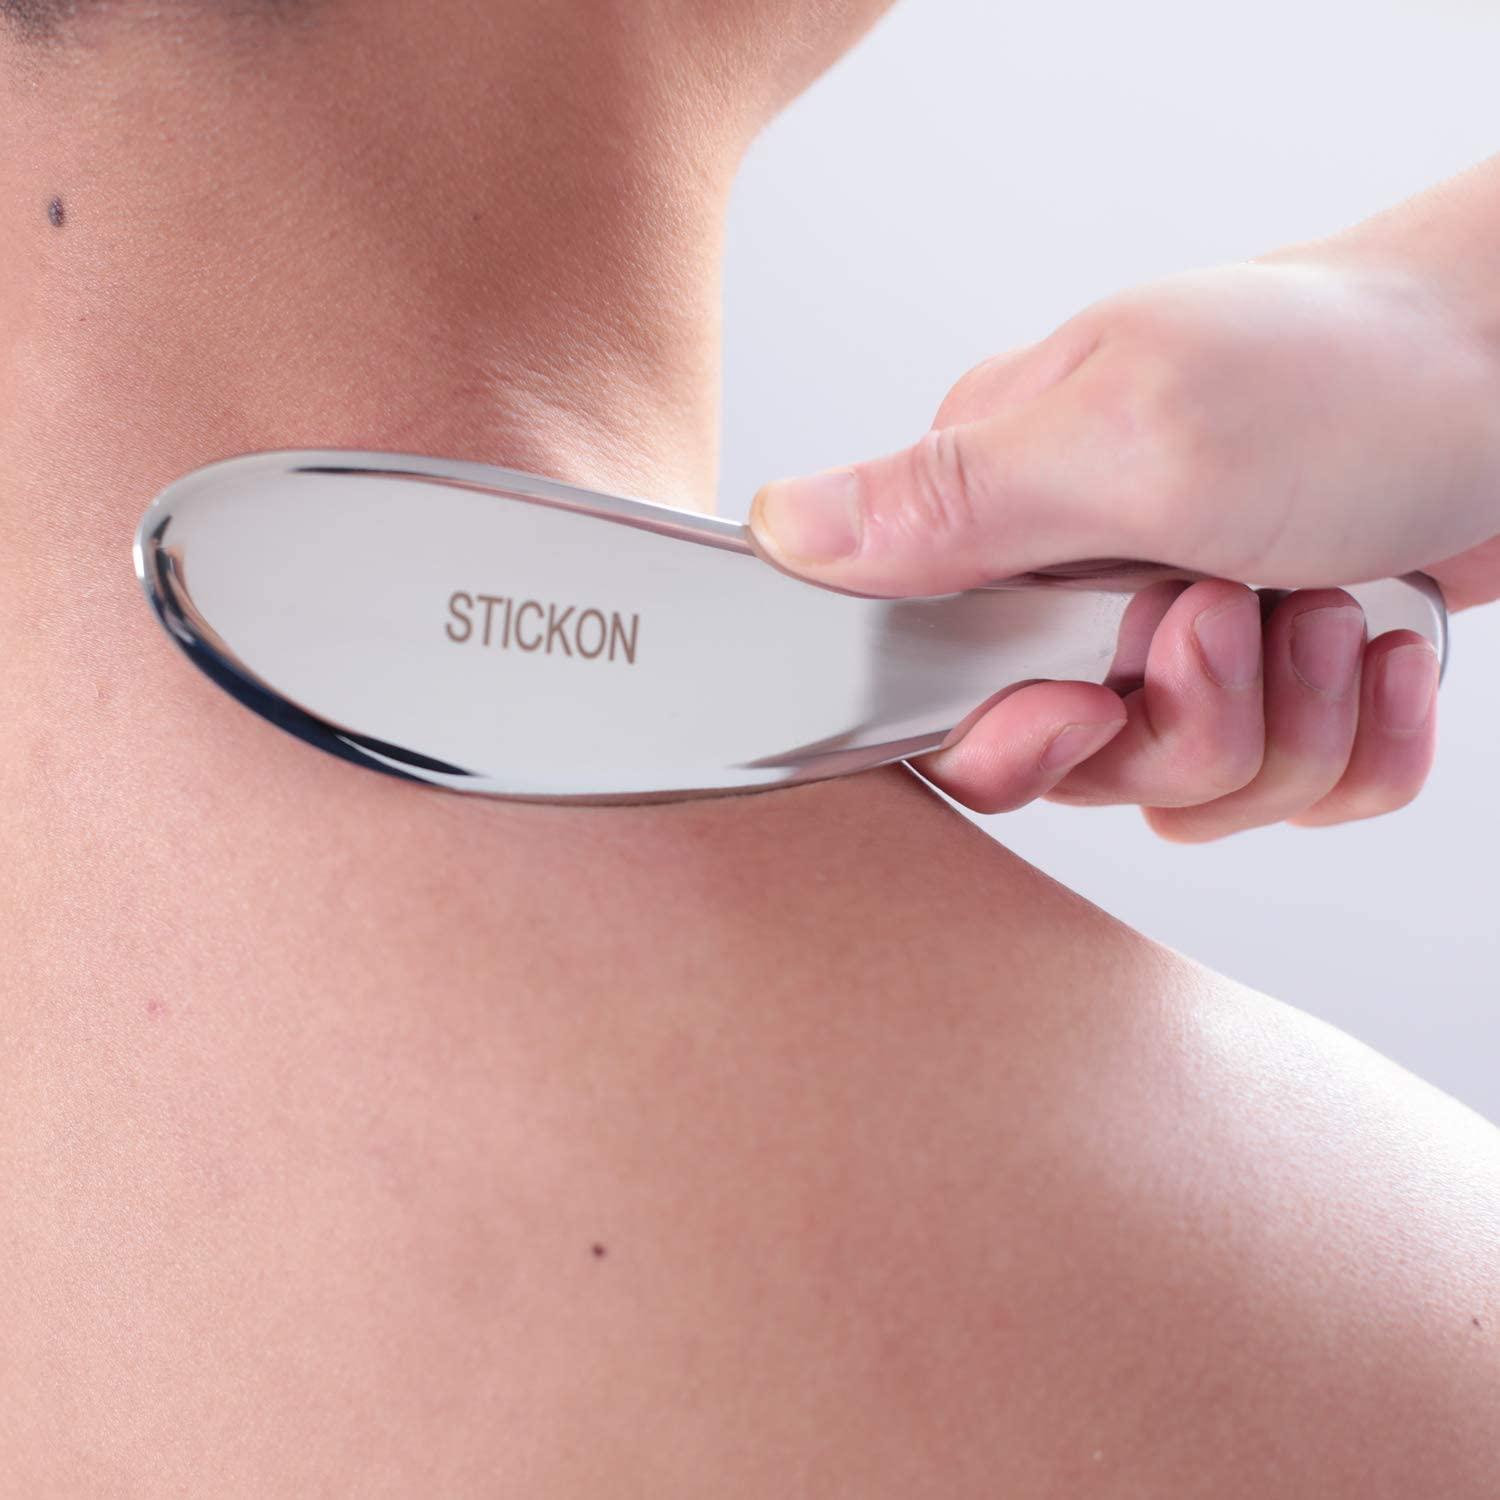 Stainless Steel Gua Sha Scraping Massage Tool Set - STICKON IASTM